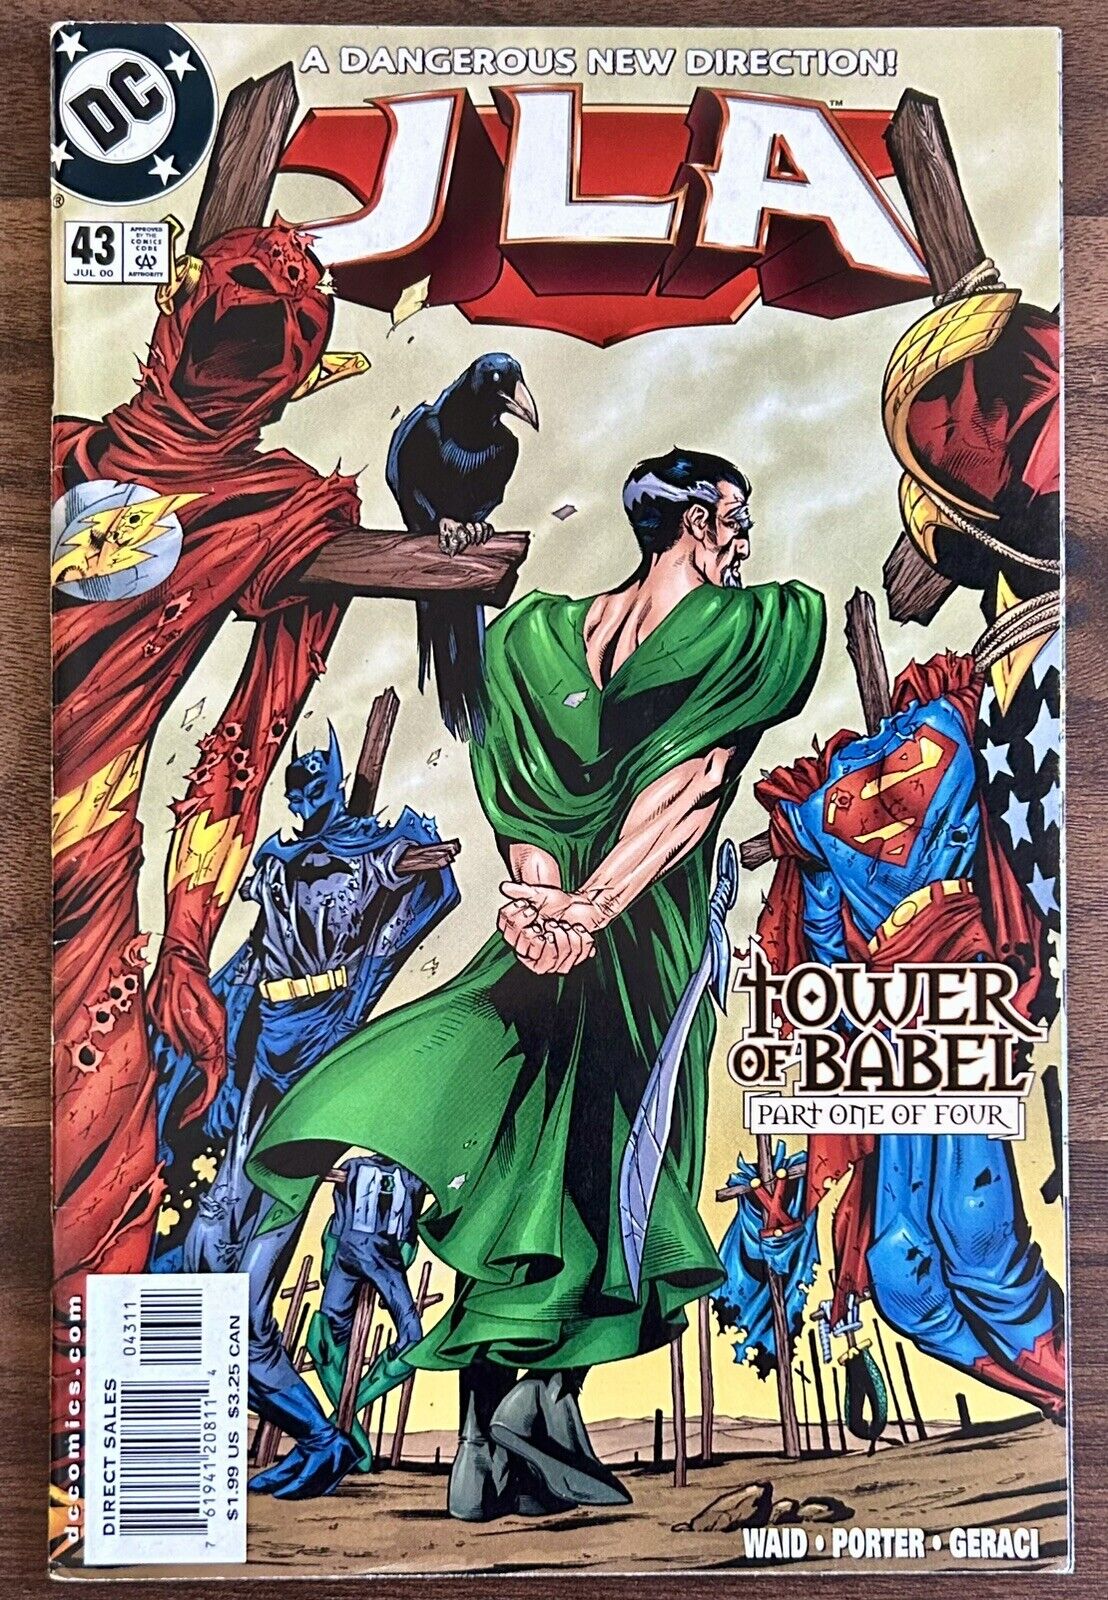 2000 DC Comics JLA #43 Tower Of Babel